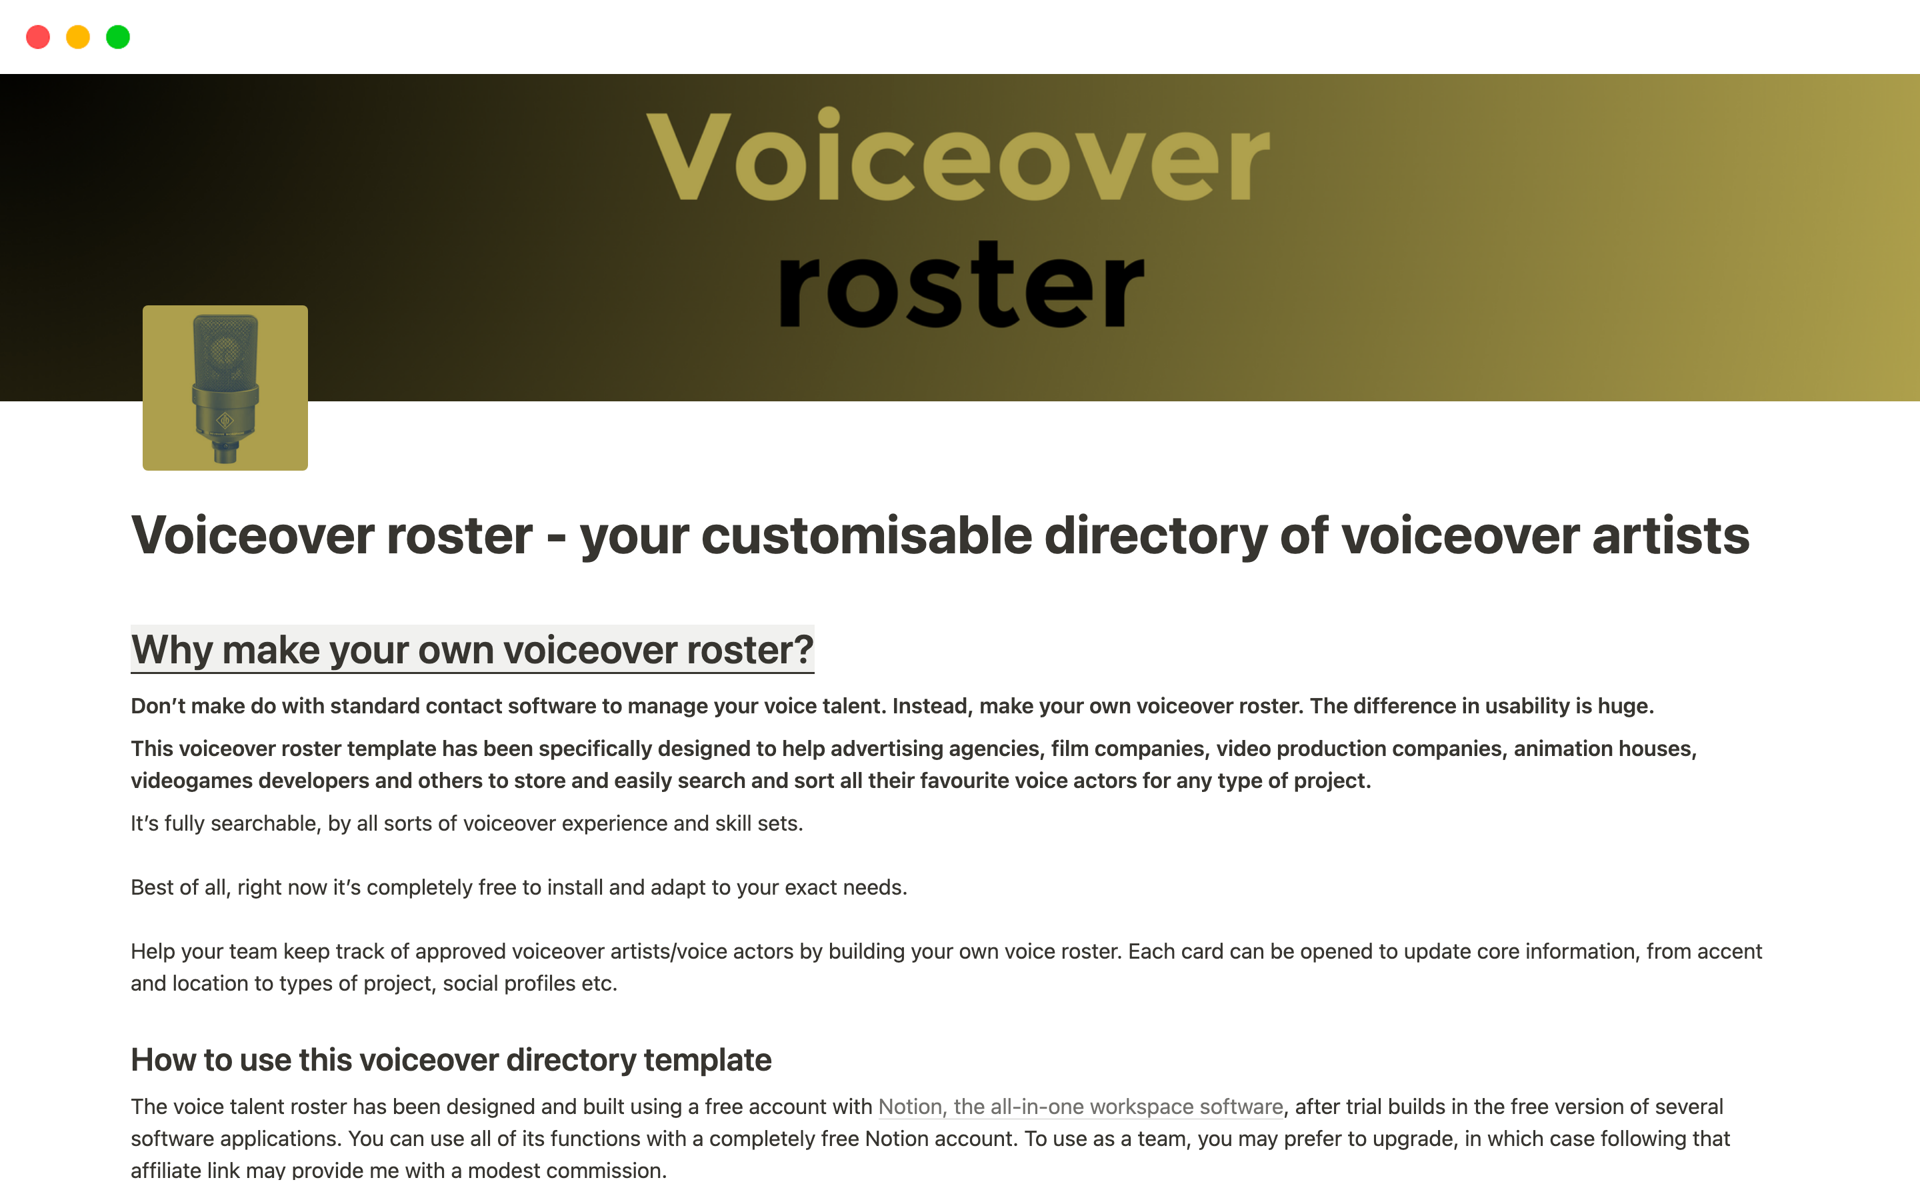 Voiceover roster - a voice artist directory님의 템플릿 미리보기